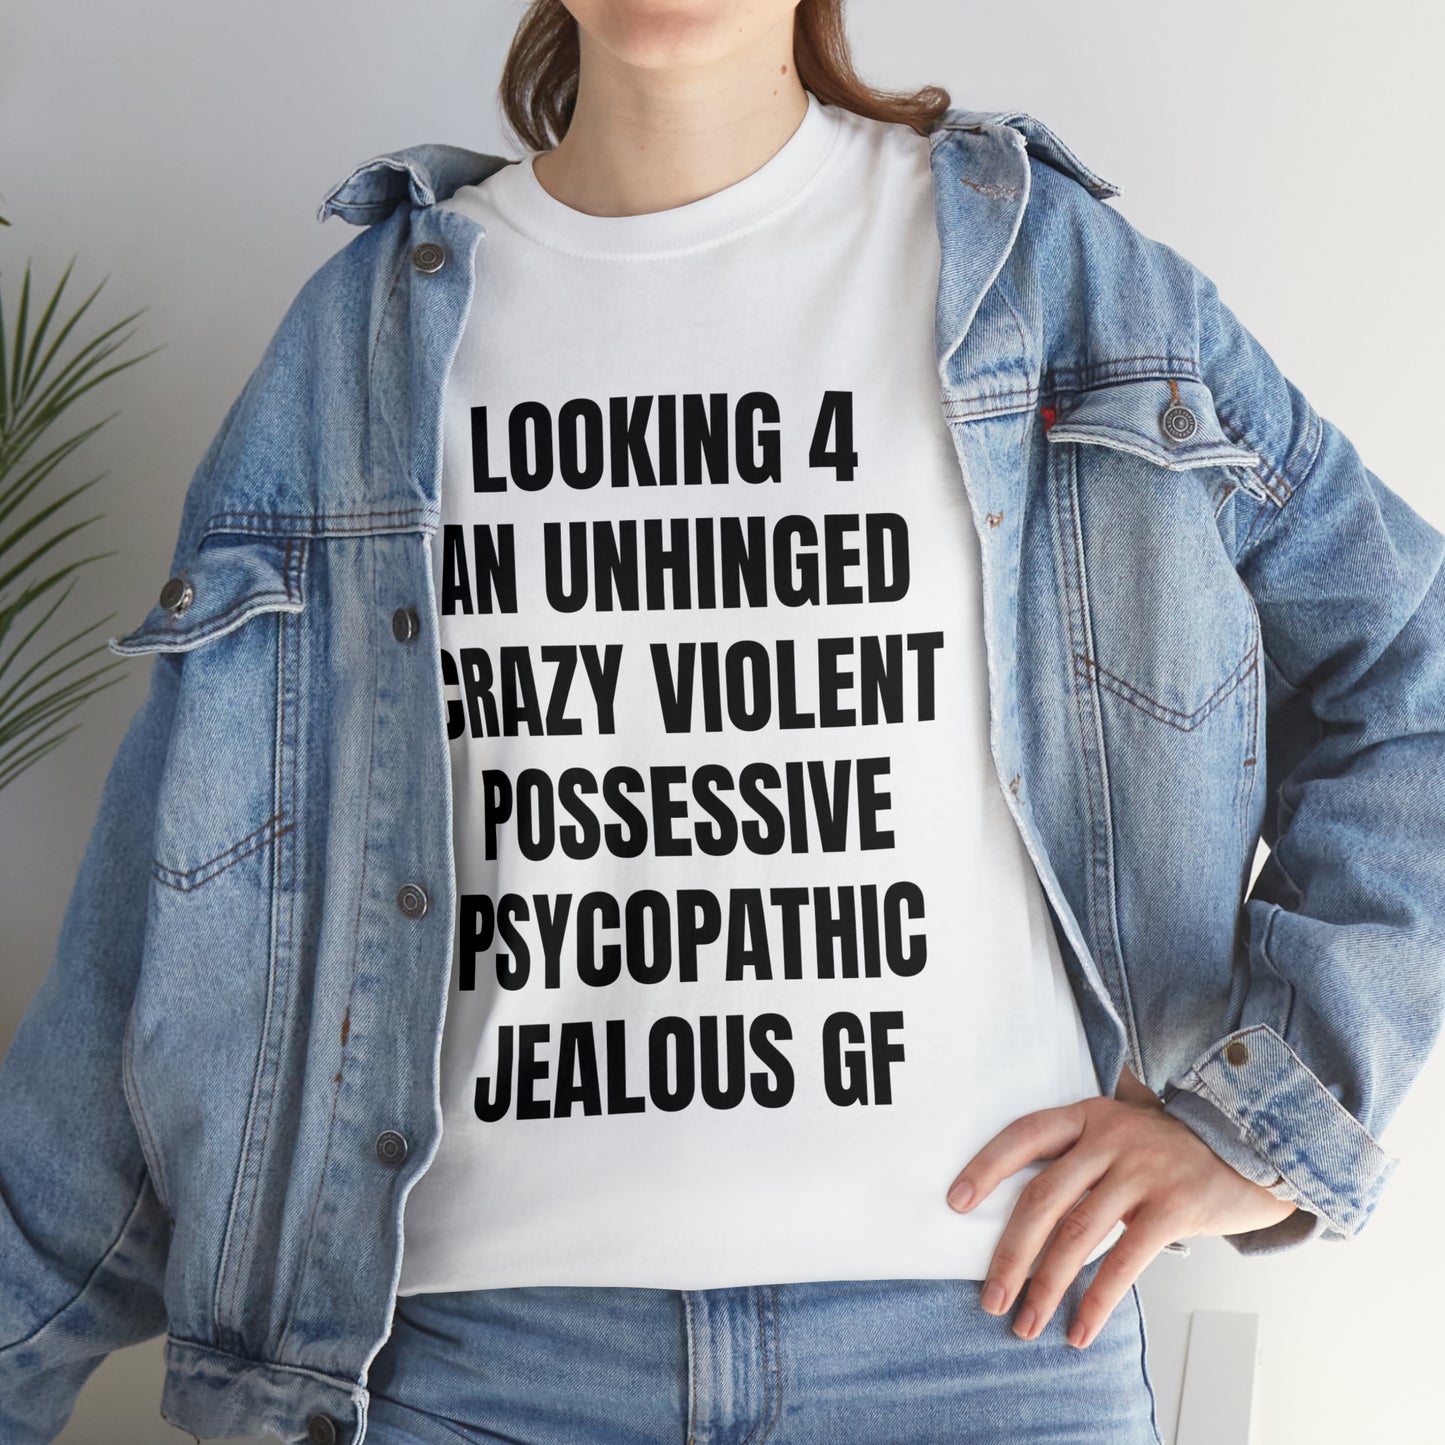 Looking 4 an Unhinged Crazy Violent Possessive Psychopathic Jealous GF